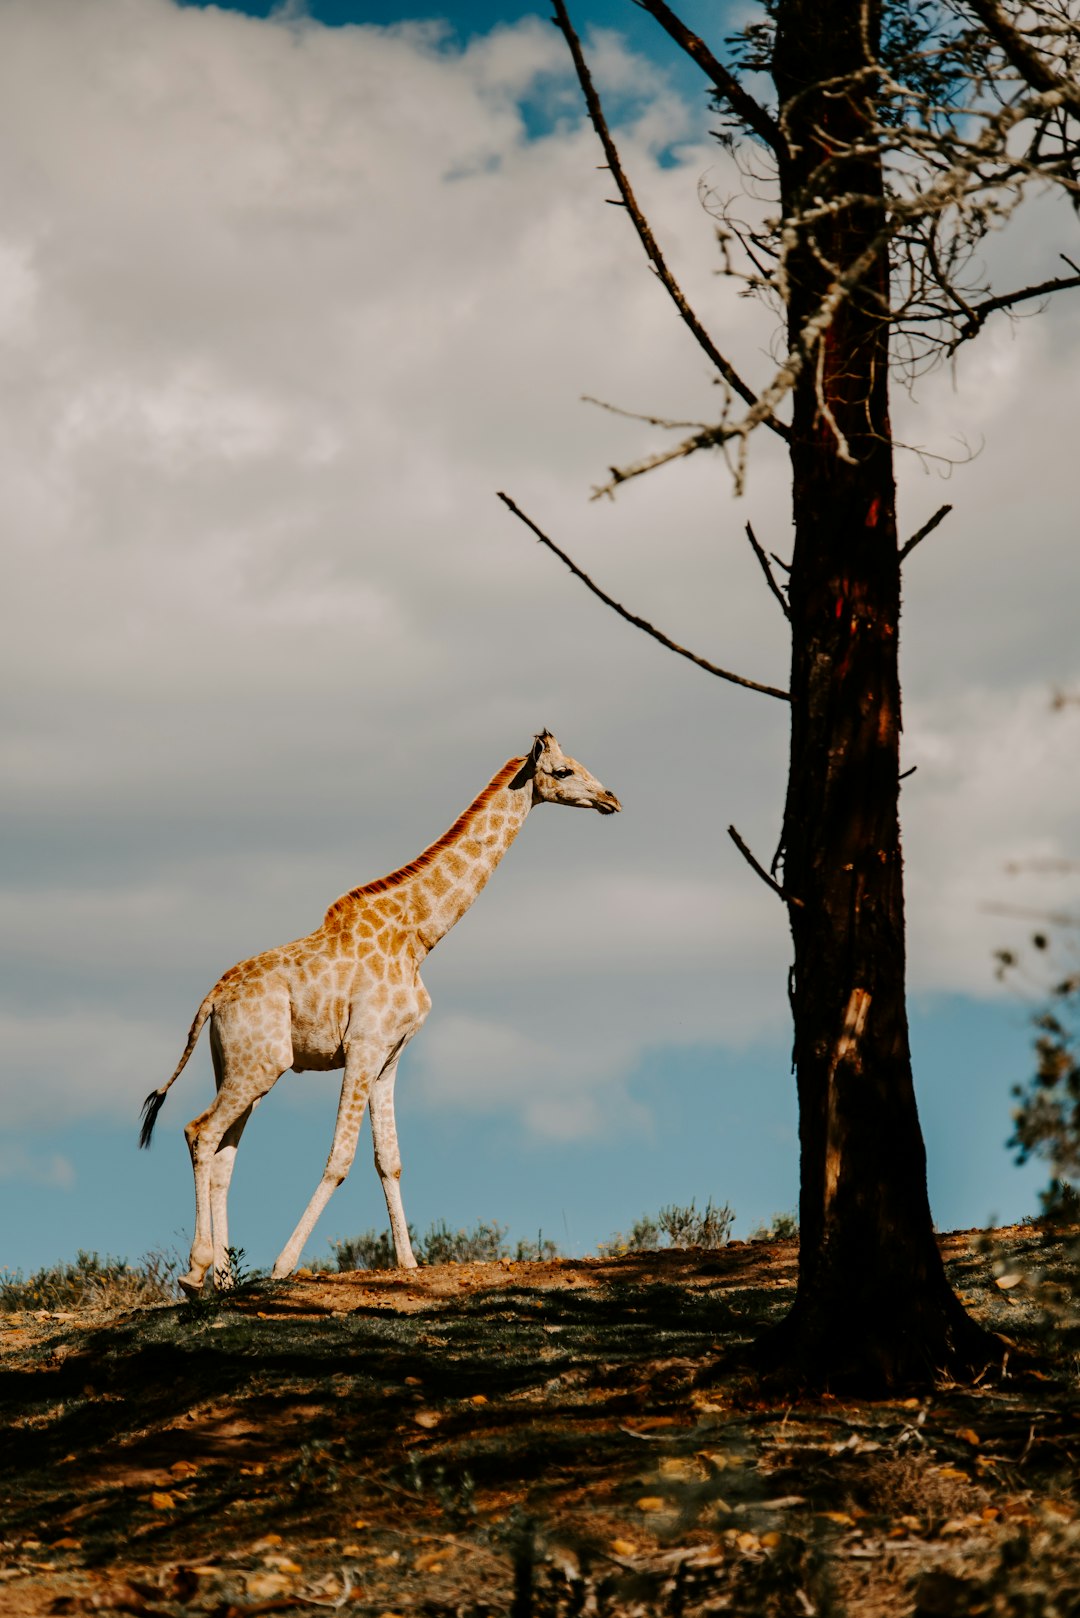 brown giraffe standing on brown grass field during daytime